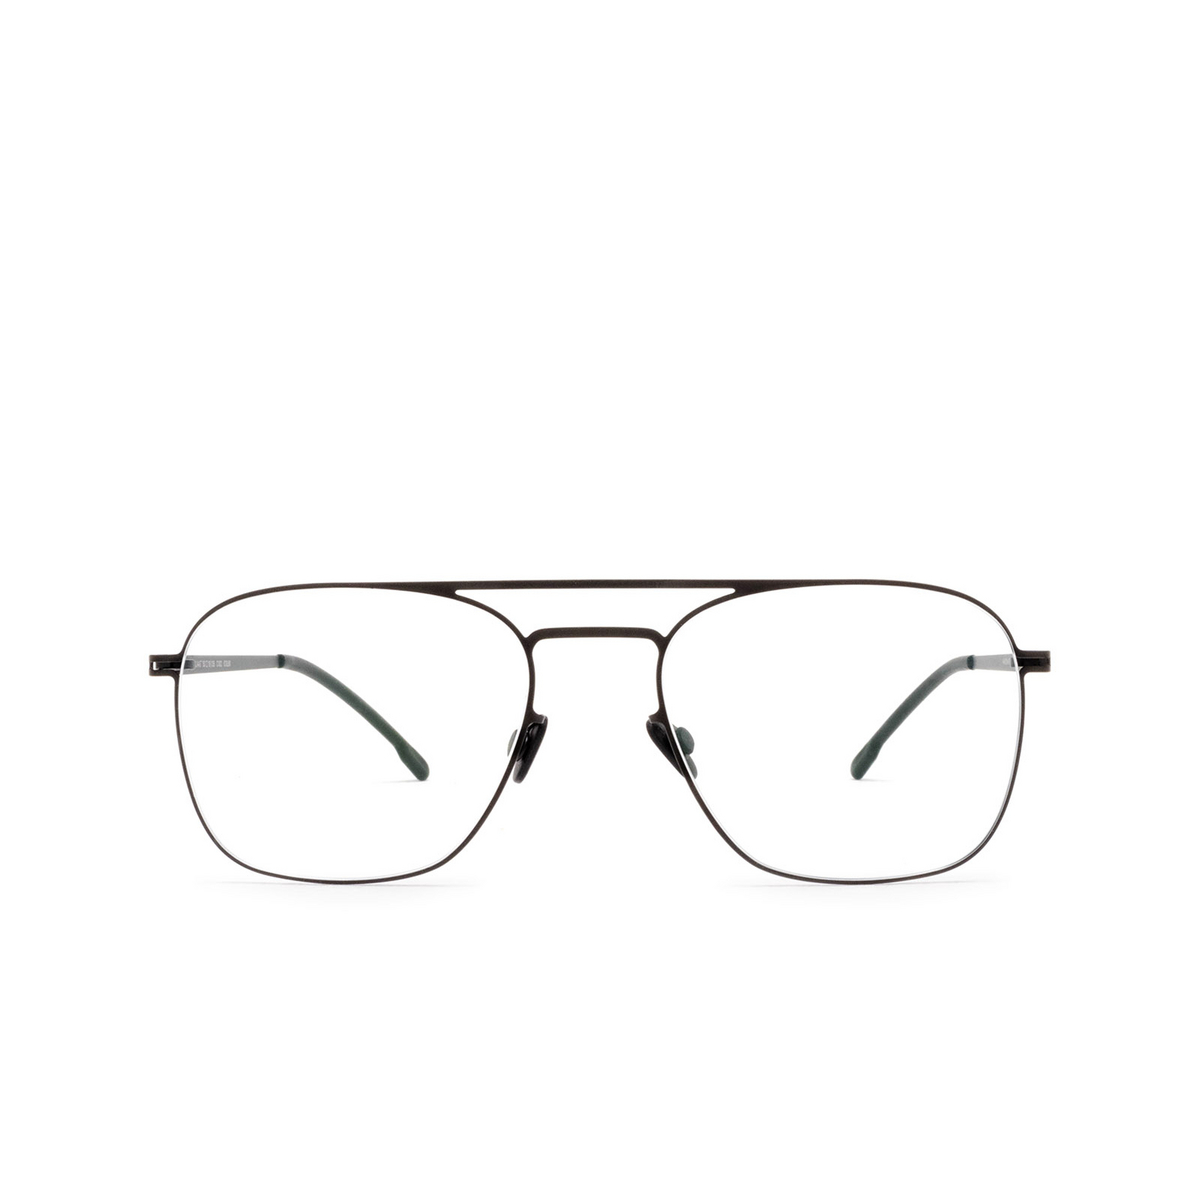 Mykita® Square Eyeglasses: Claas color 002 Black - front view